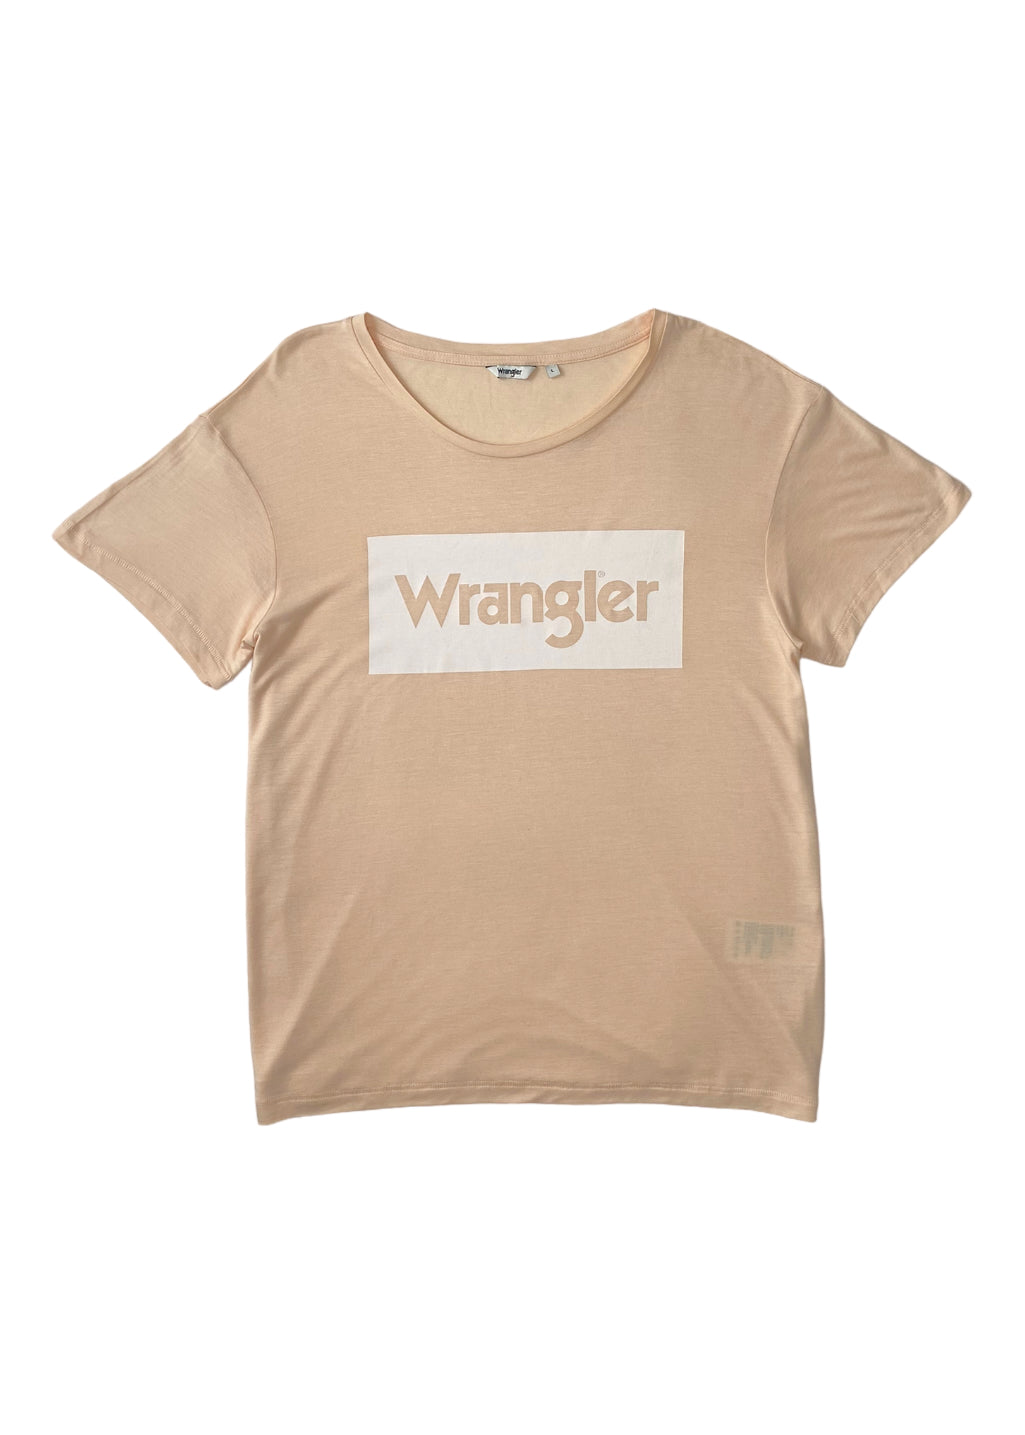 Wrangler - WAKSDTP Drape Logo Tee - Tender Peach - Hardpressed Print Studio Inc.